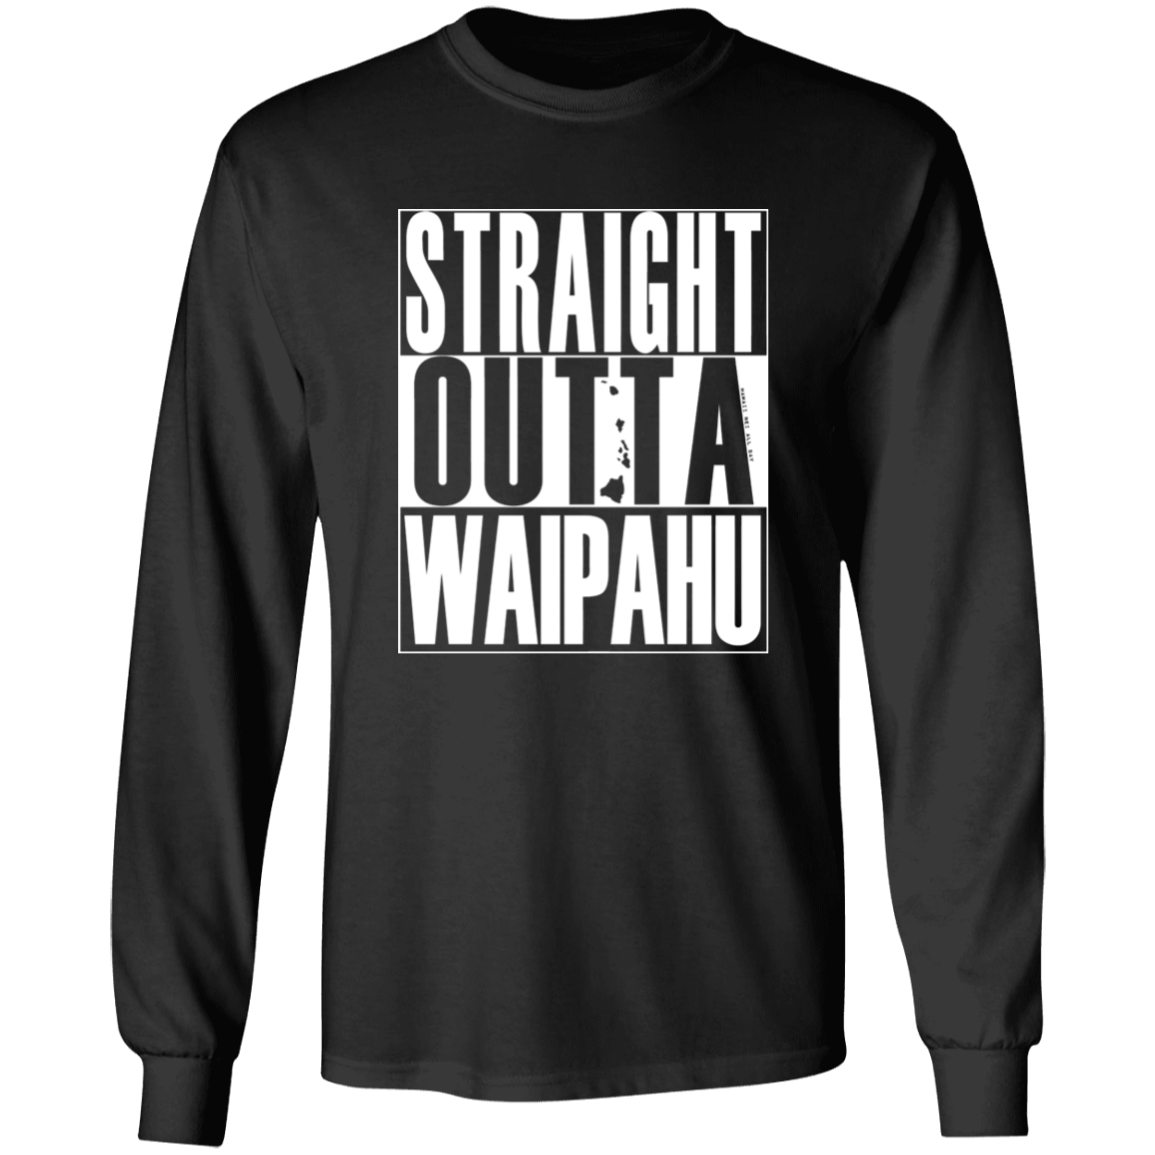 Straight Outta Waipahu (white ink)  LS T-Shirt